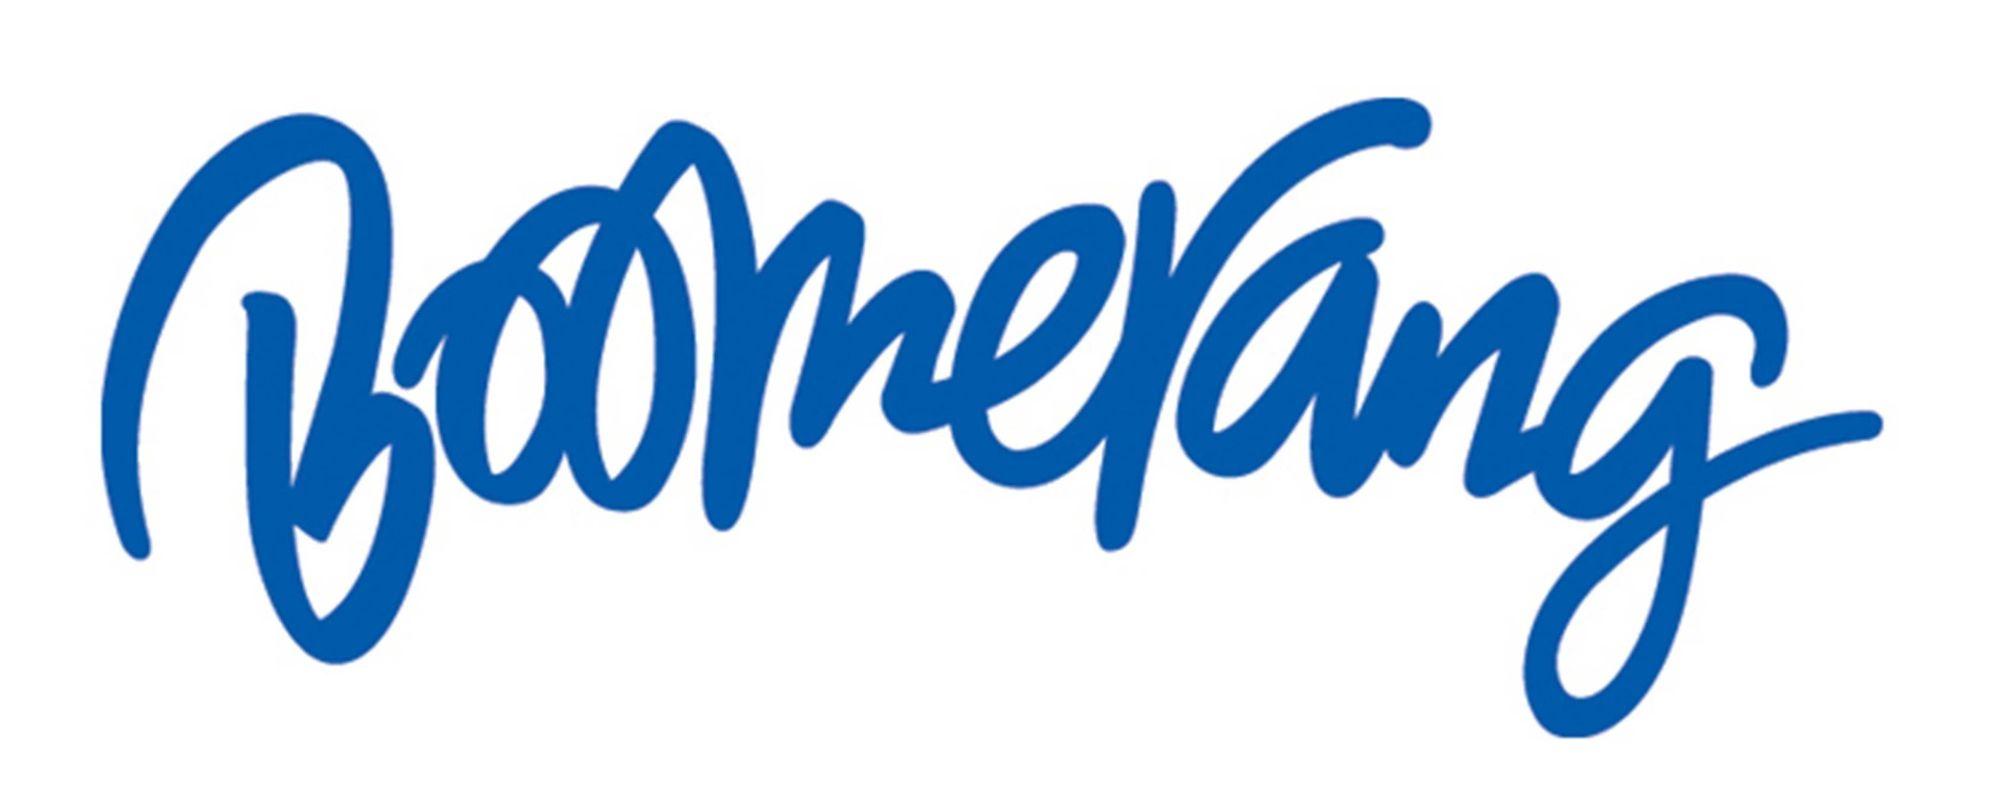 Old Boomerang TV Logo - Boomerang (TV Channel)